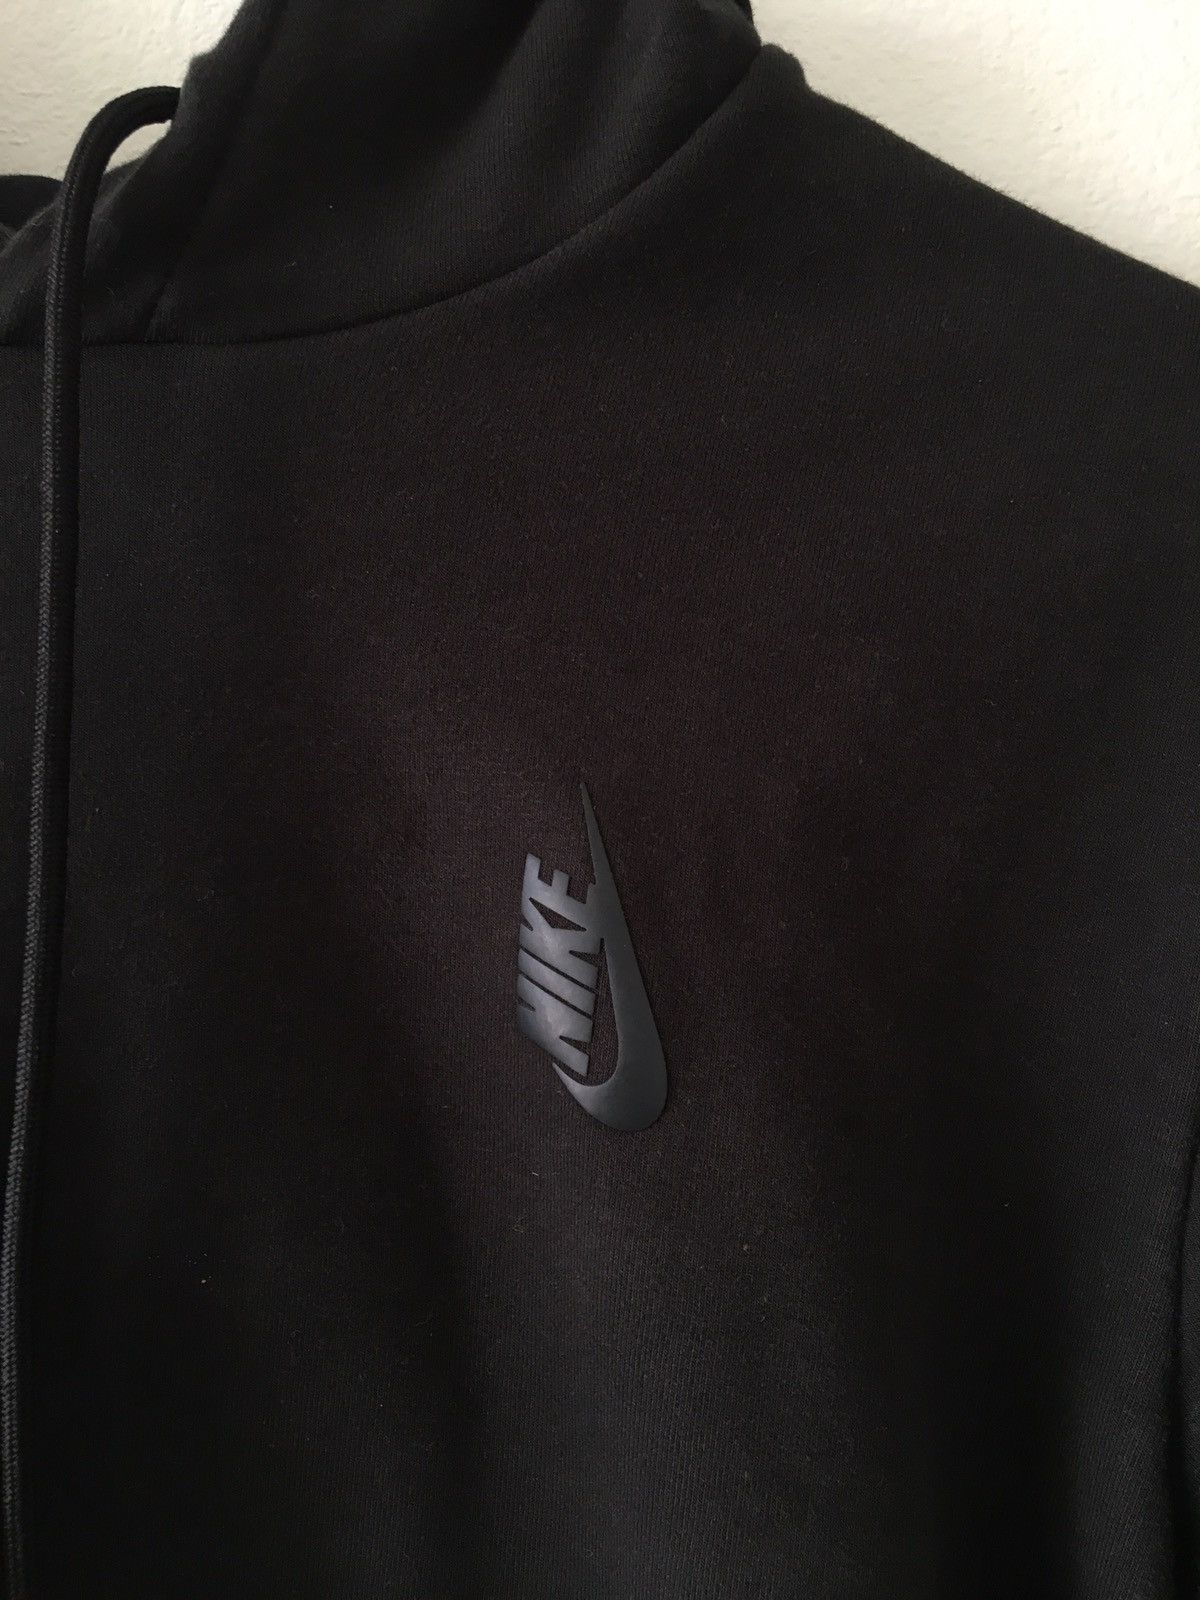 Nike NikeLab Hooded French Terry Sweatshirt Size US M / EU 48-50 / 2 - 8 Thumbnail